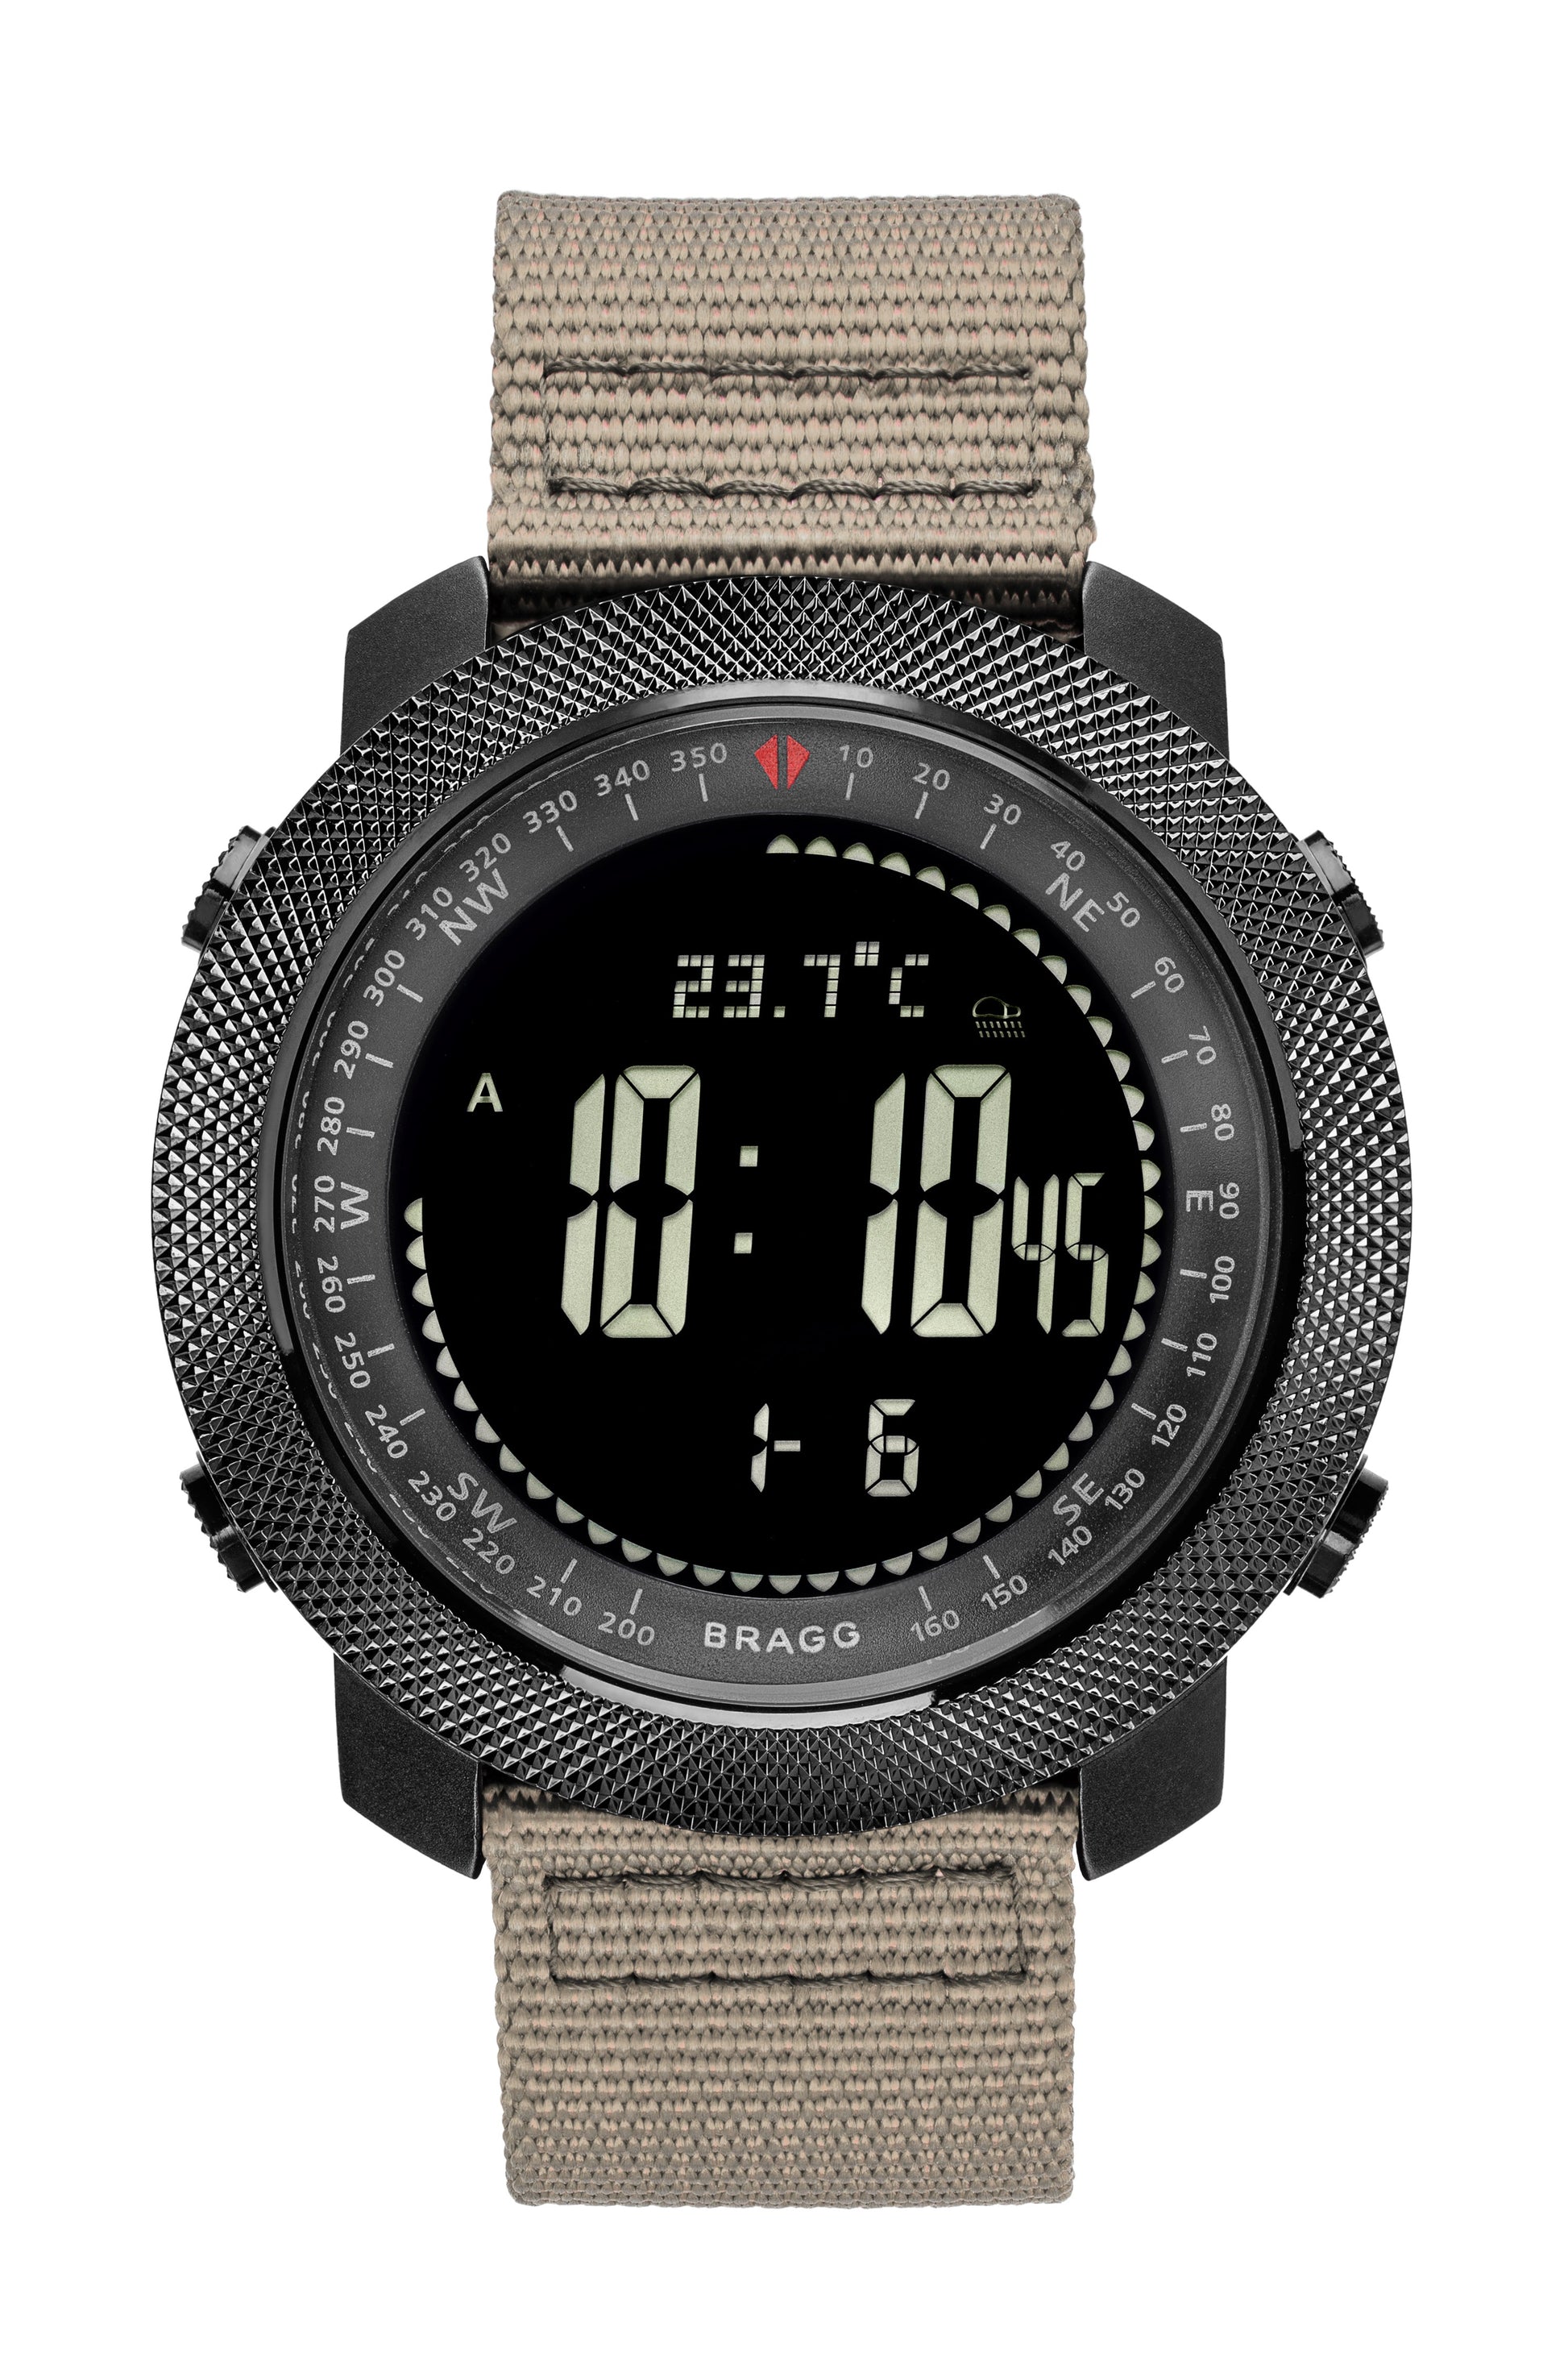 Bragg Black Ops Chrono watch with Olive Nato Band Military Sports Digital Watch Bragg Watch 